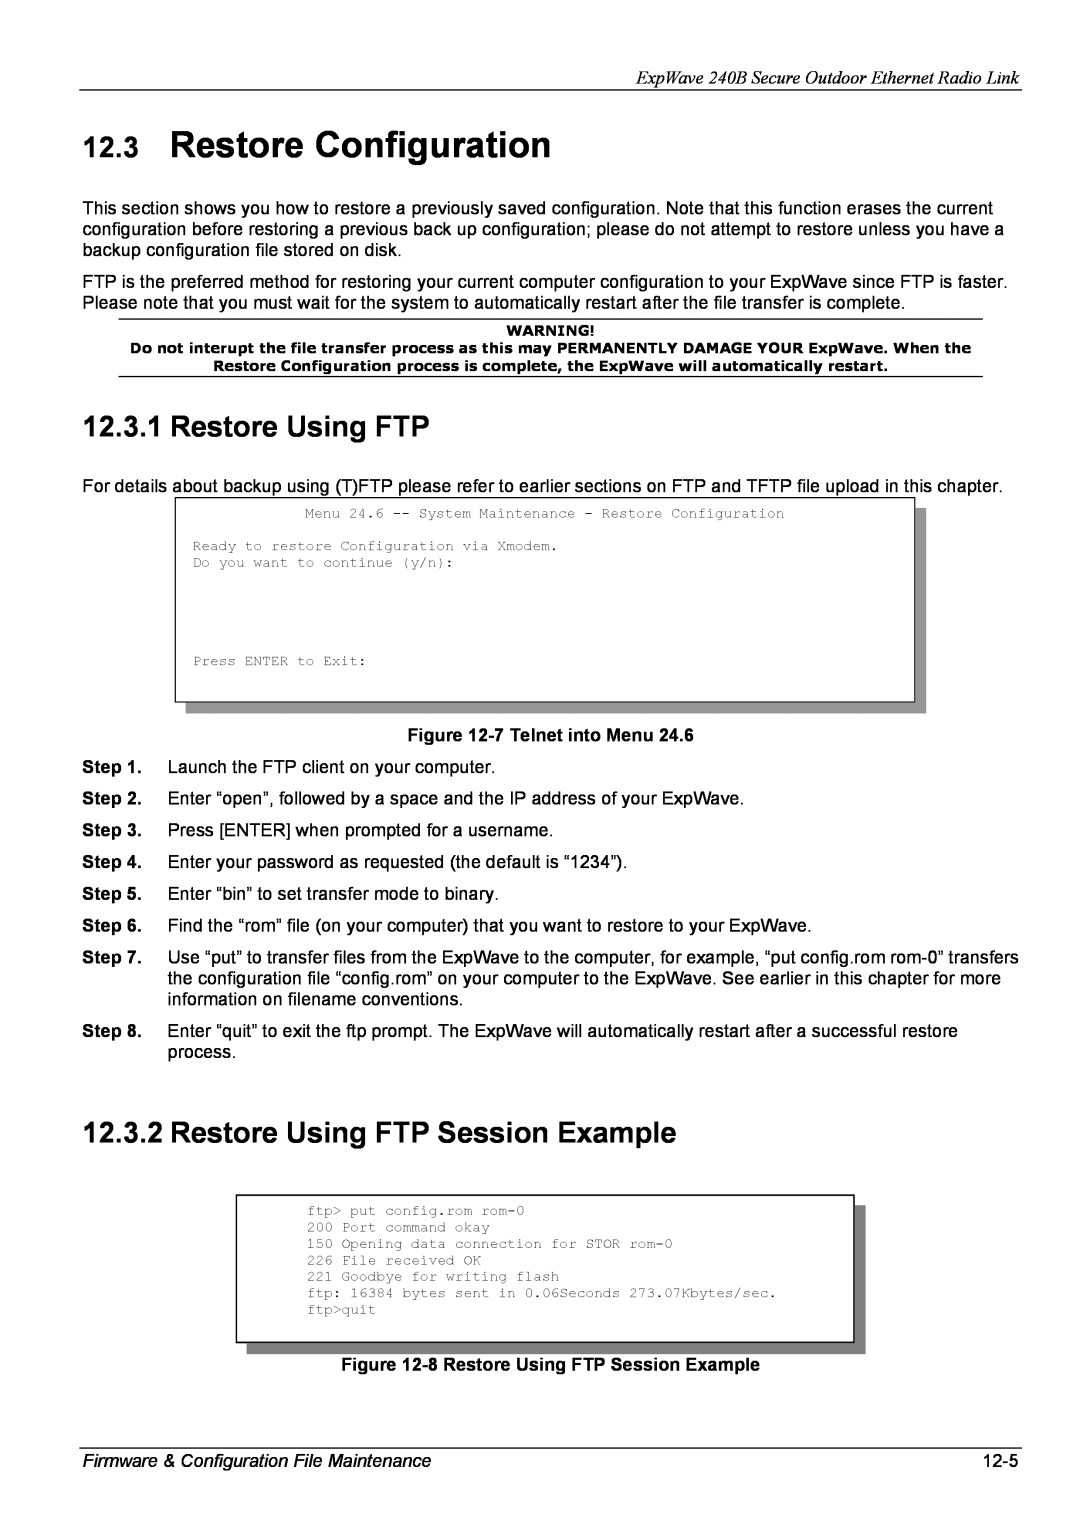 ZyXEL Communications 240B manual Restore Configuration, Restore Using FTP Session Example, 7 Telnet into Menu, 12-5 